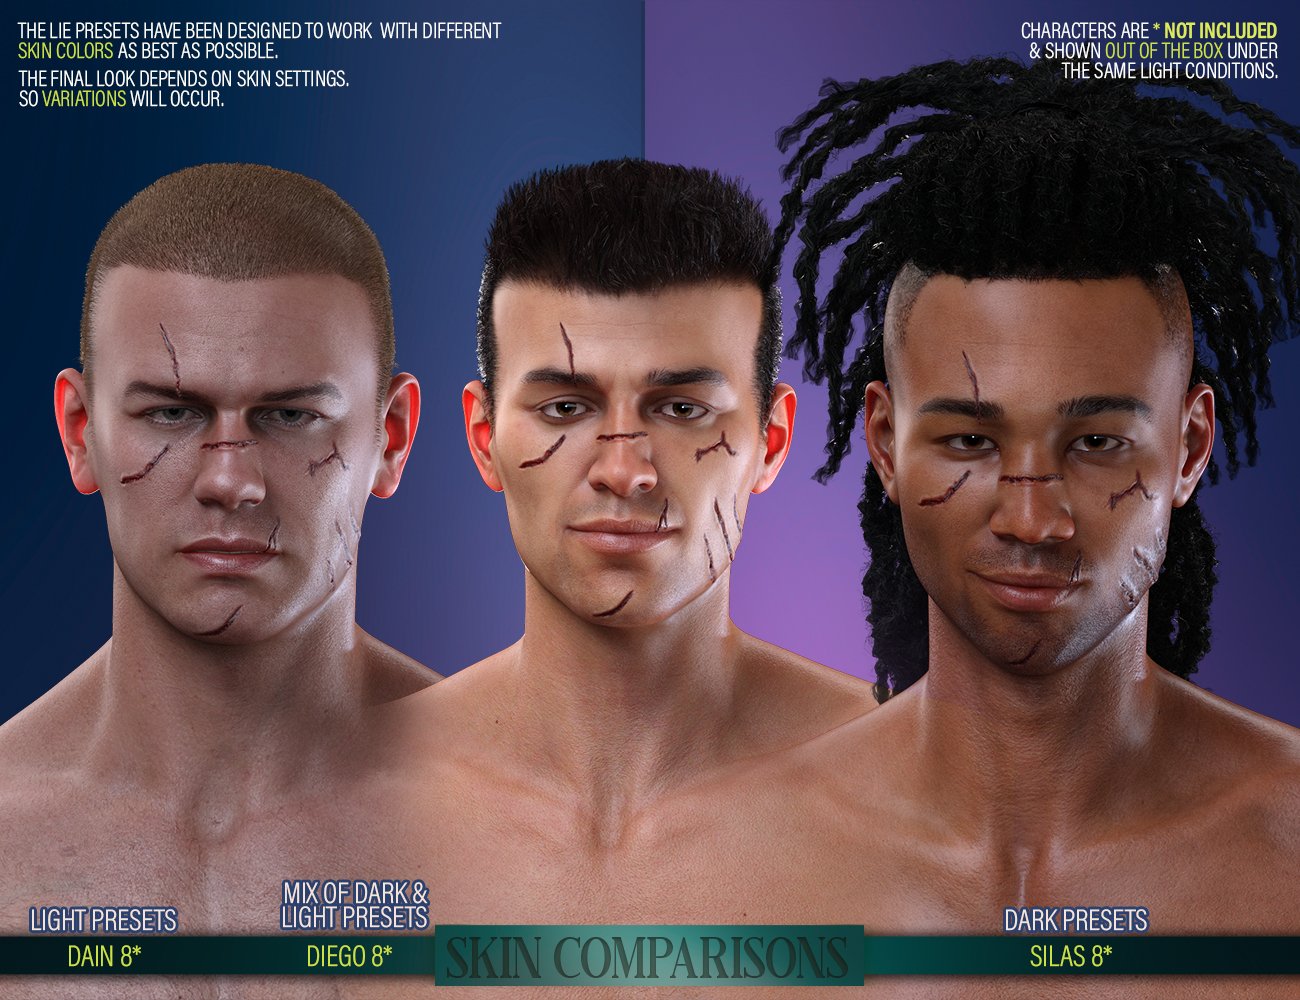 HD Face Wounds 2 for Genesis 3 and 8 Male(s) by: FenixPhoenixEsid, 3D Models by Daz 3D